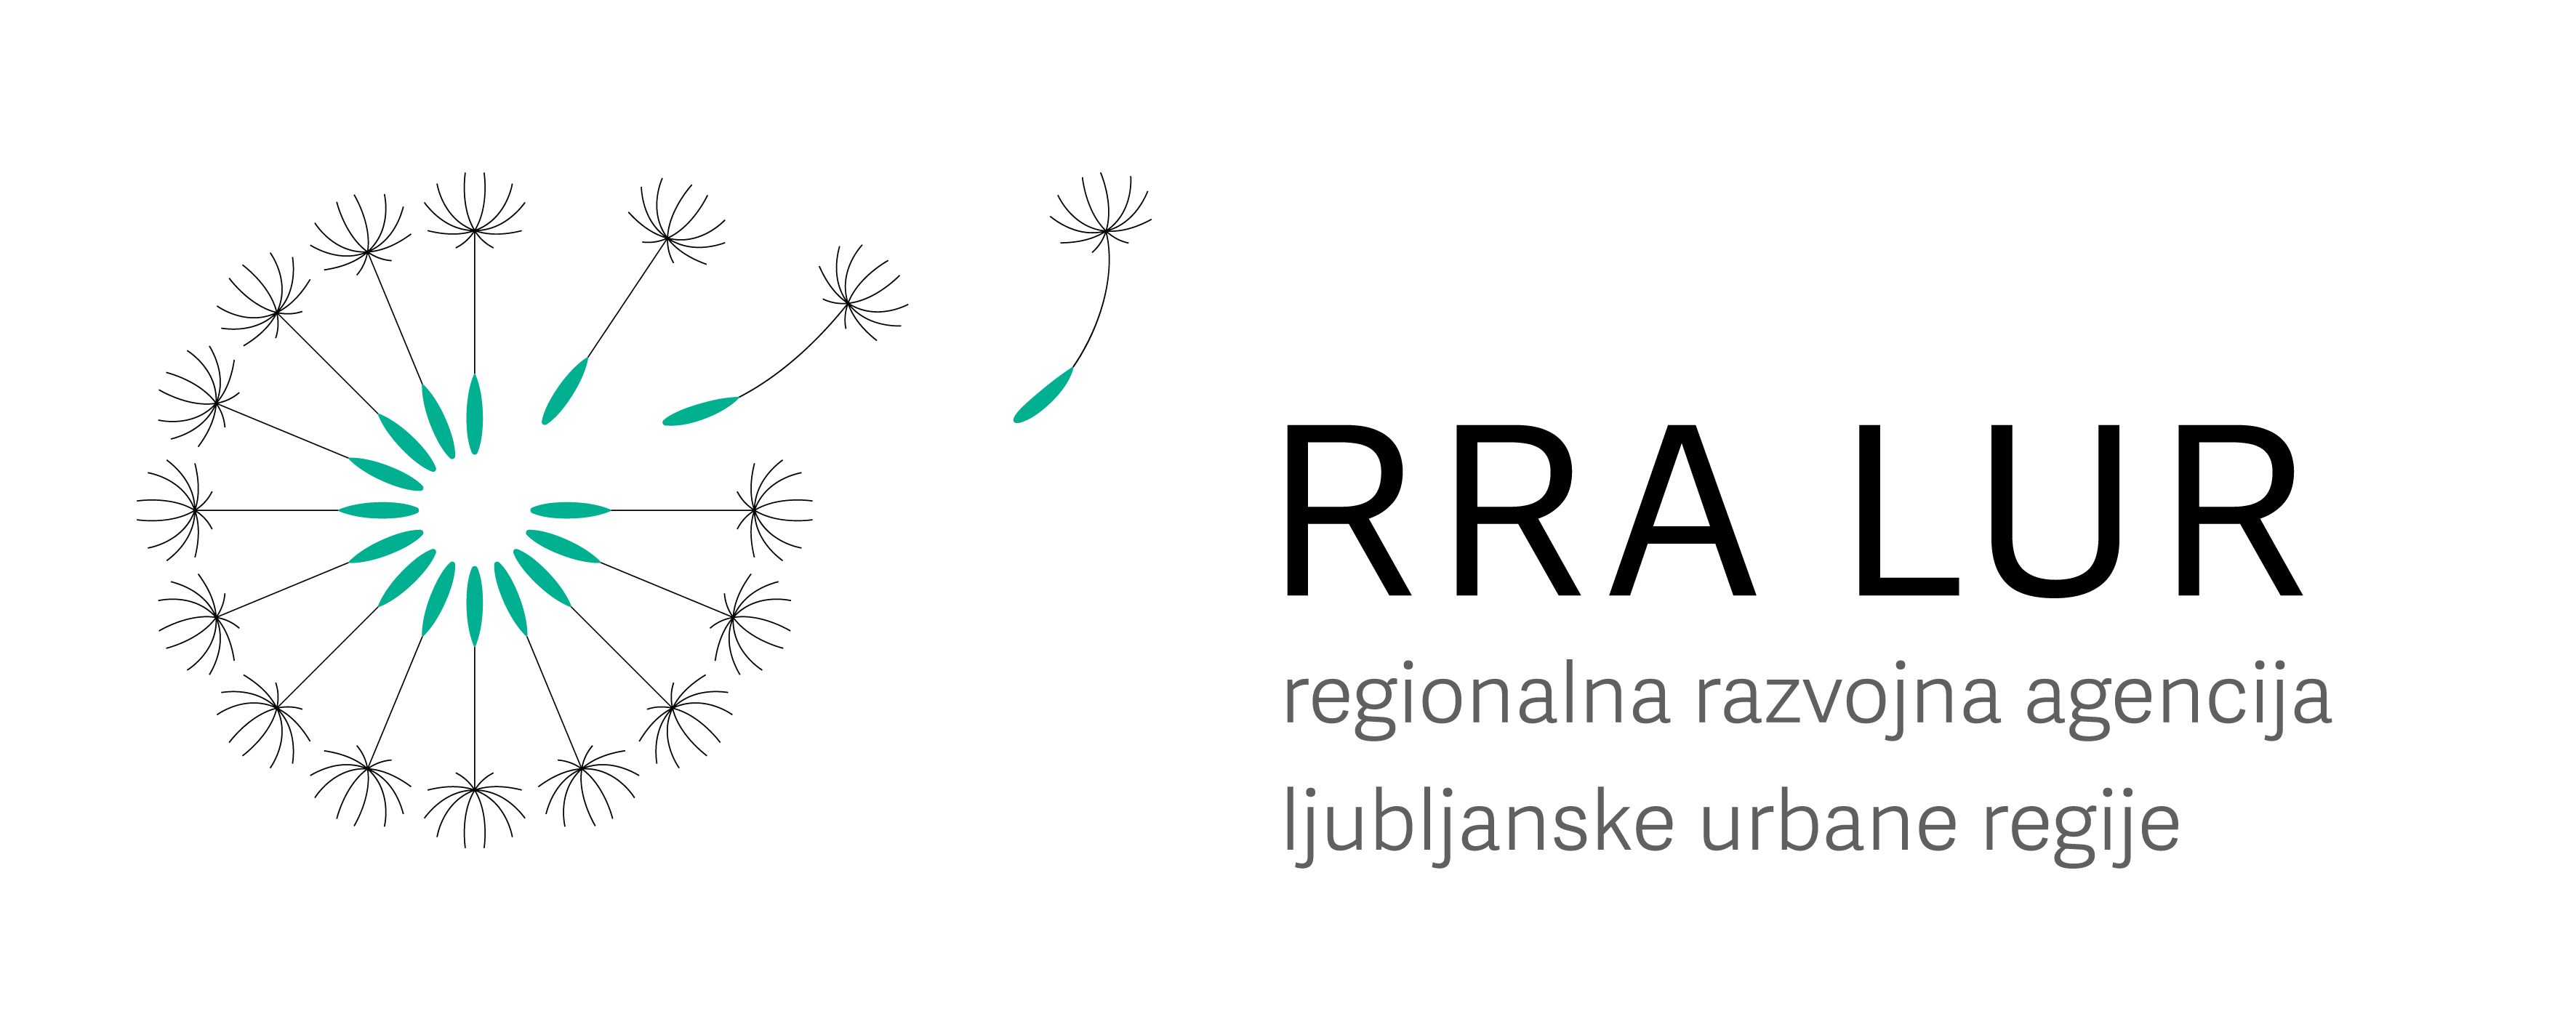 Logotip_RRA LUR_s pripisom_SLO_sekundarni